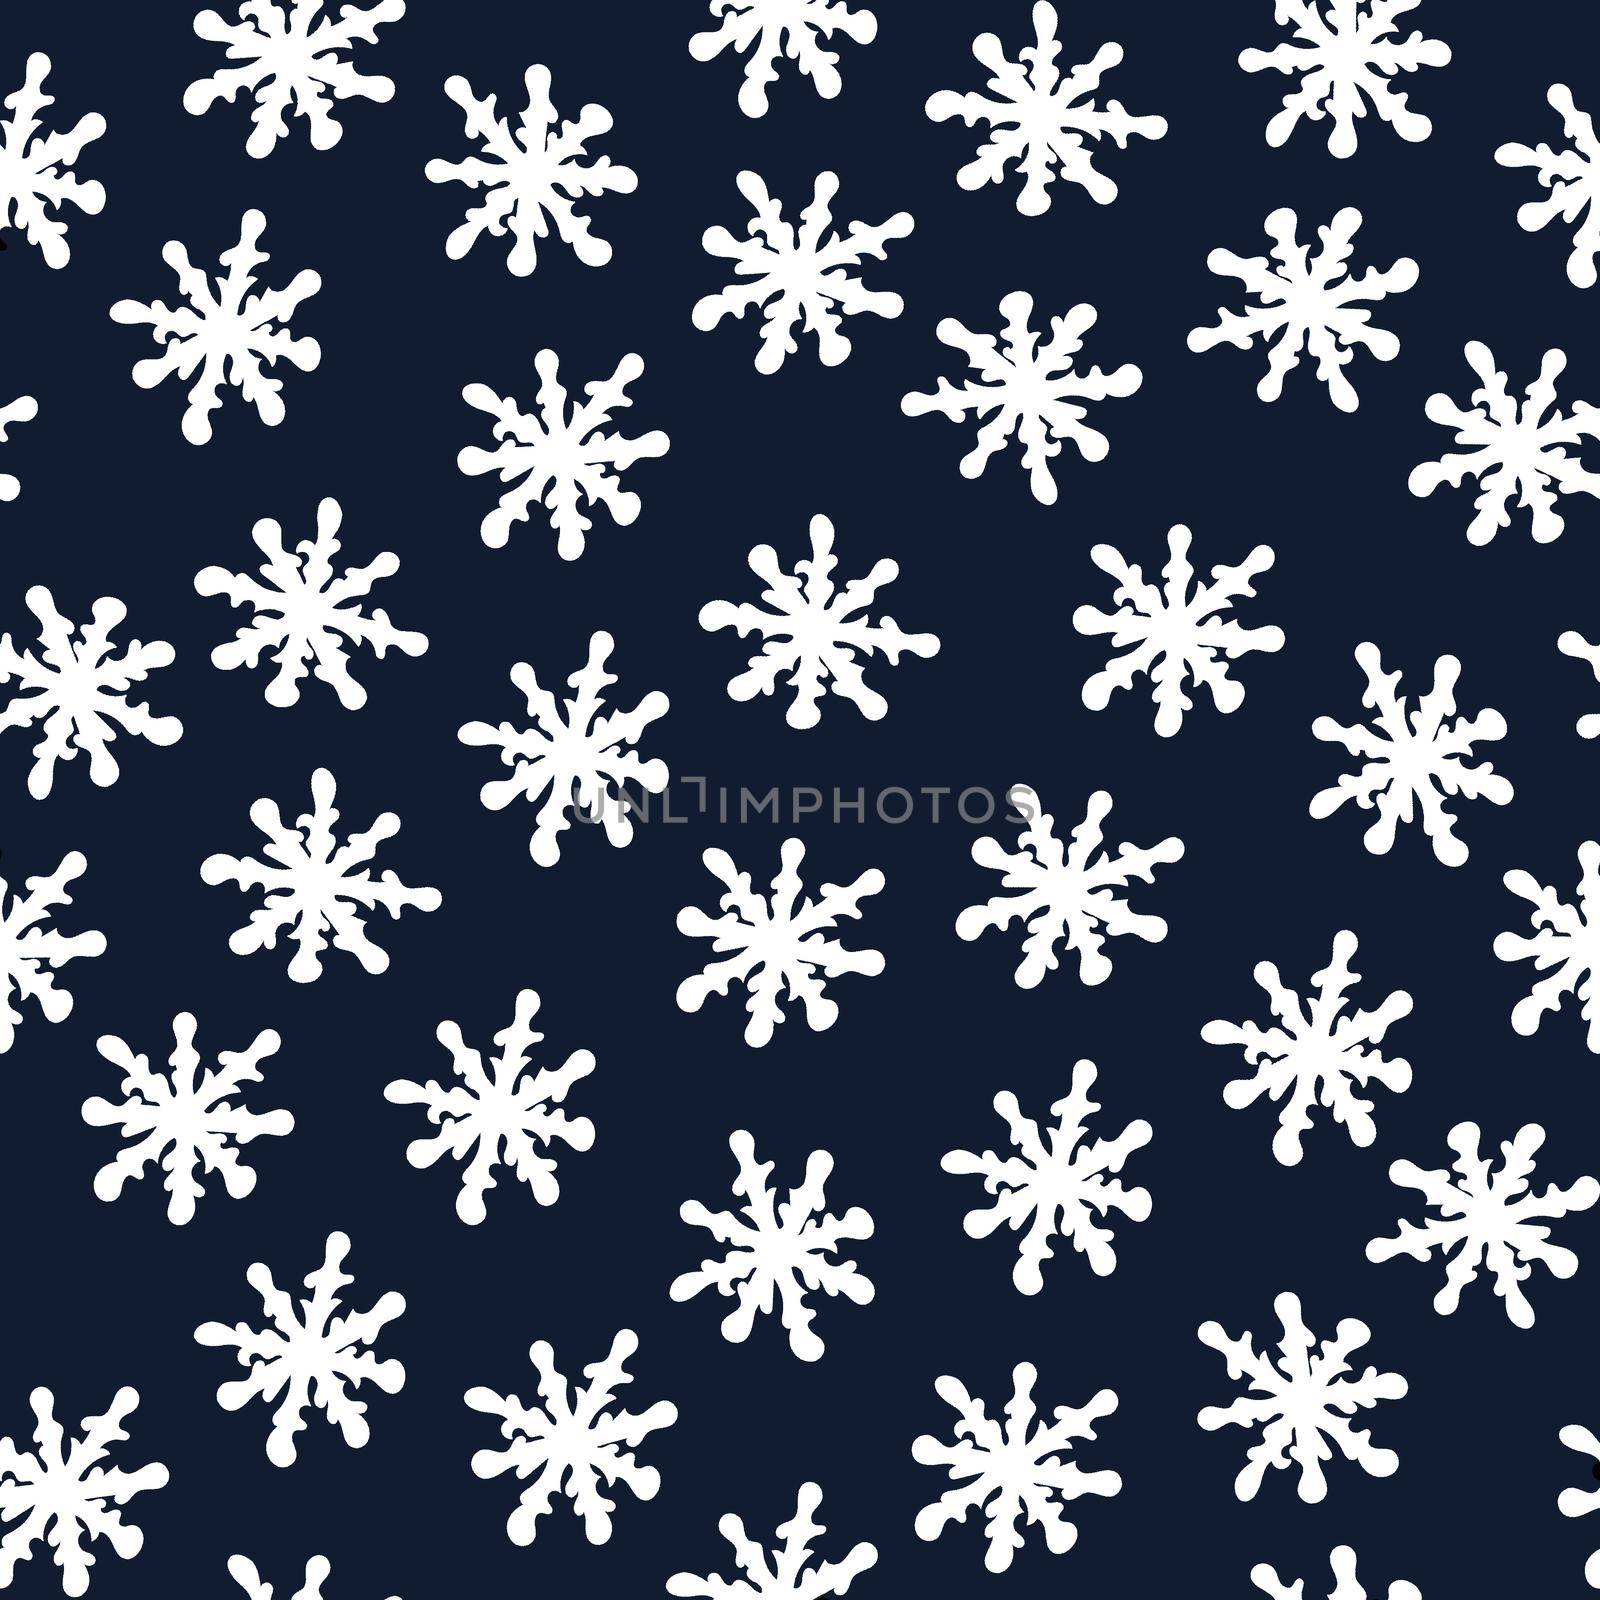 Seamless Pattern with Snowflakes on Dark Blue Background. by Rina_Dozornaya